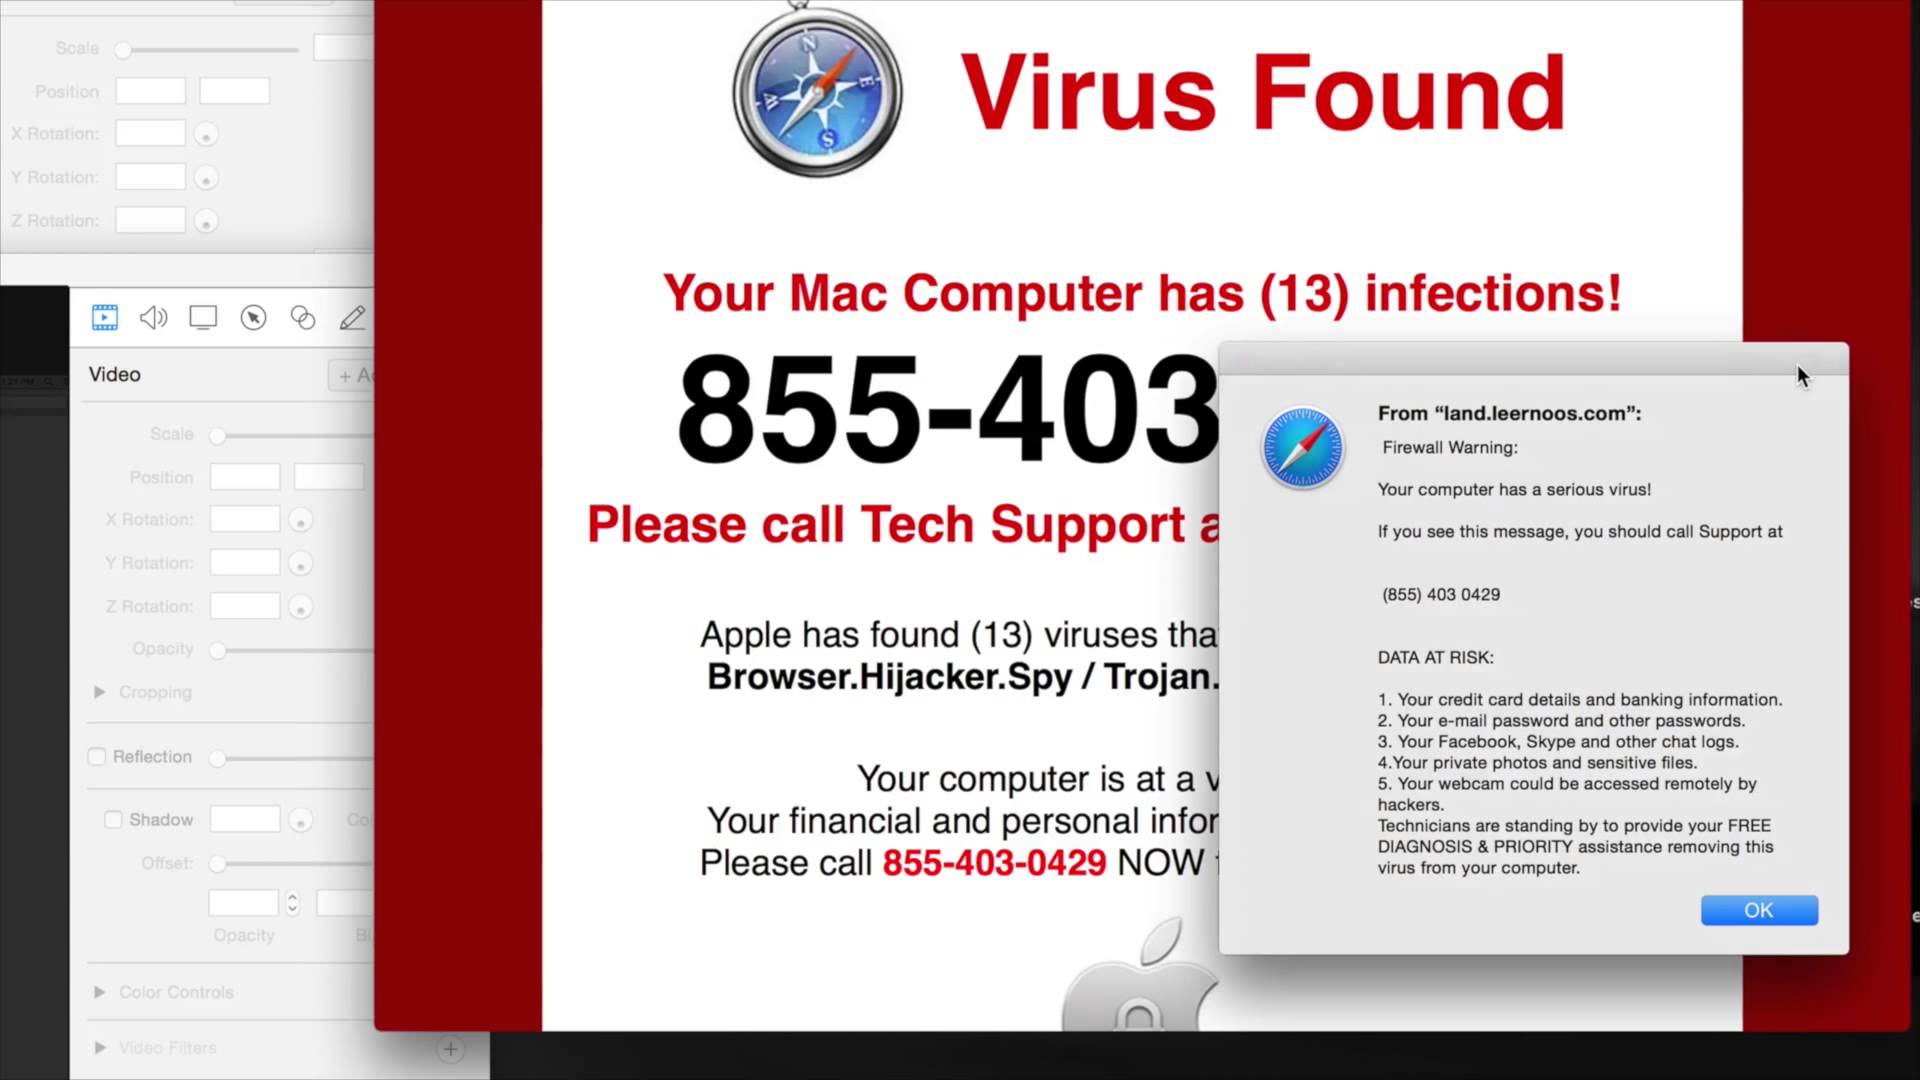 Got a Mac Virus. Do Macs get Viruses? What should I do?